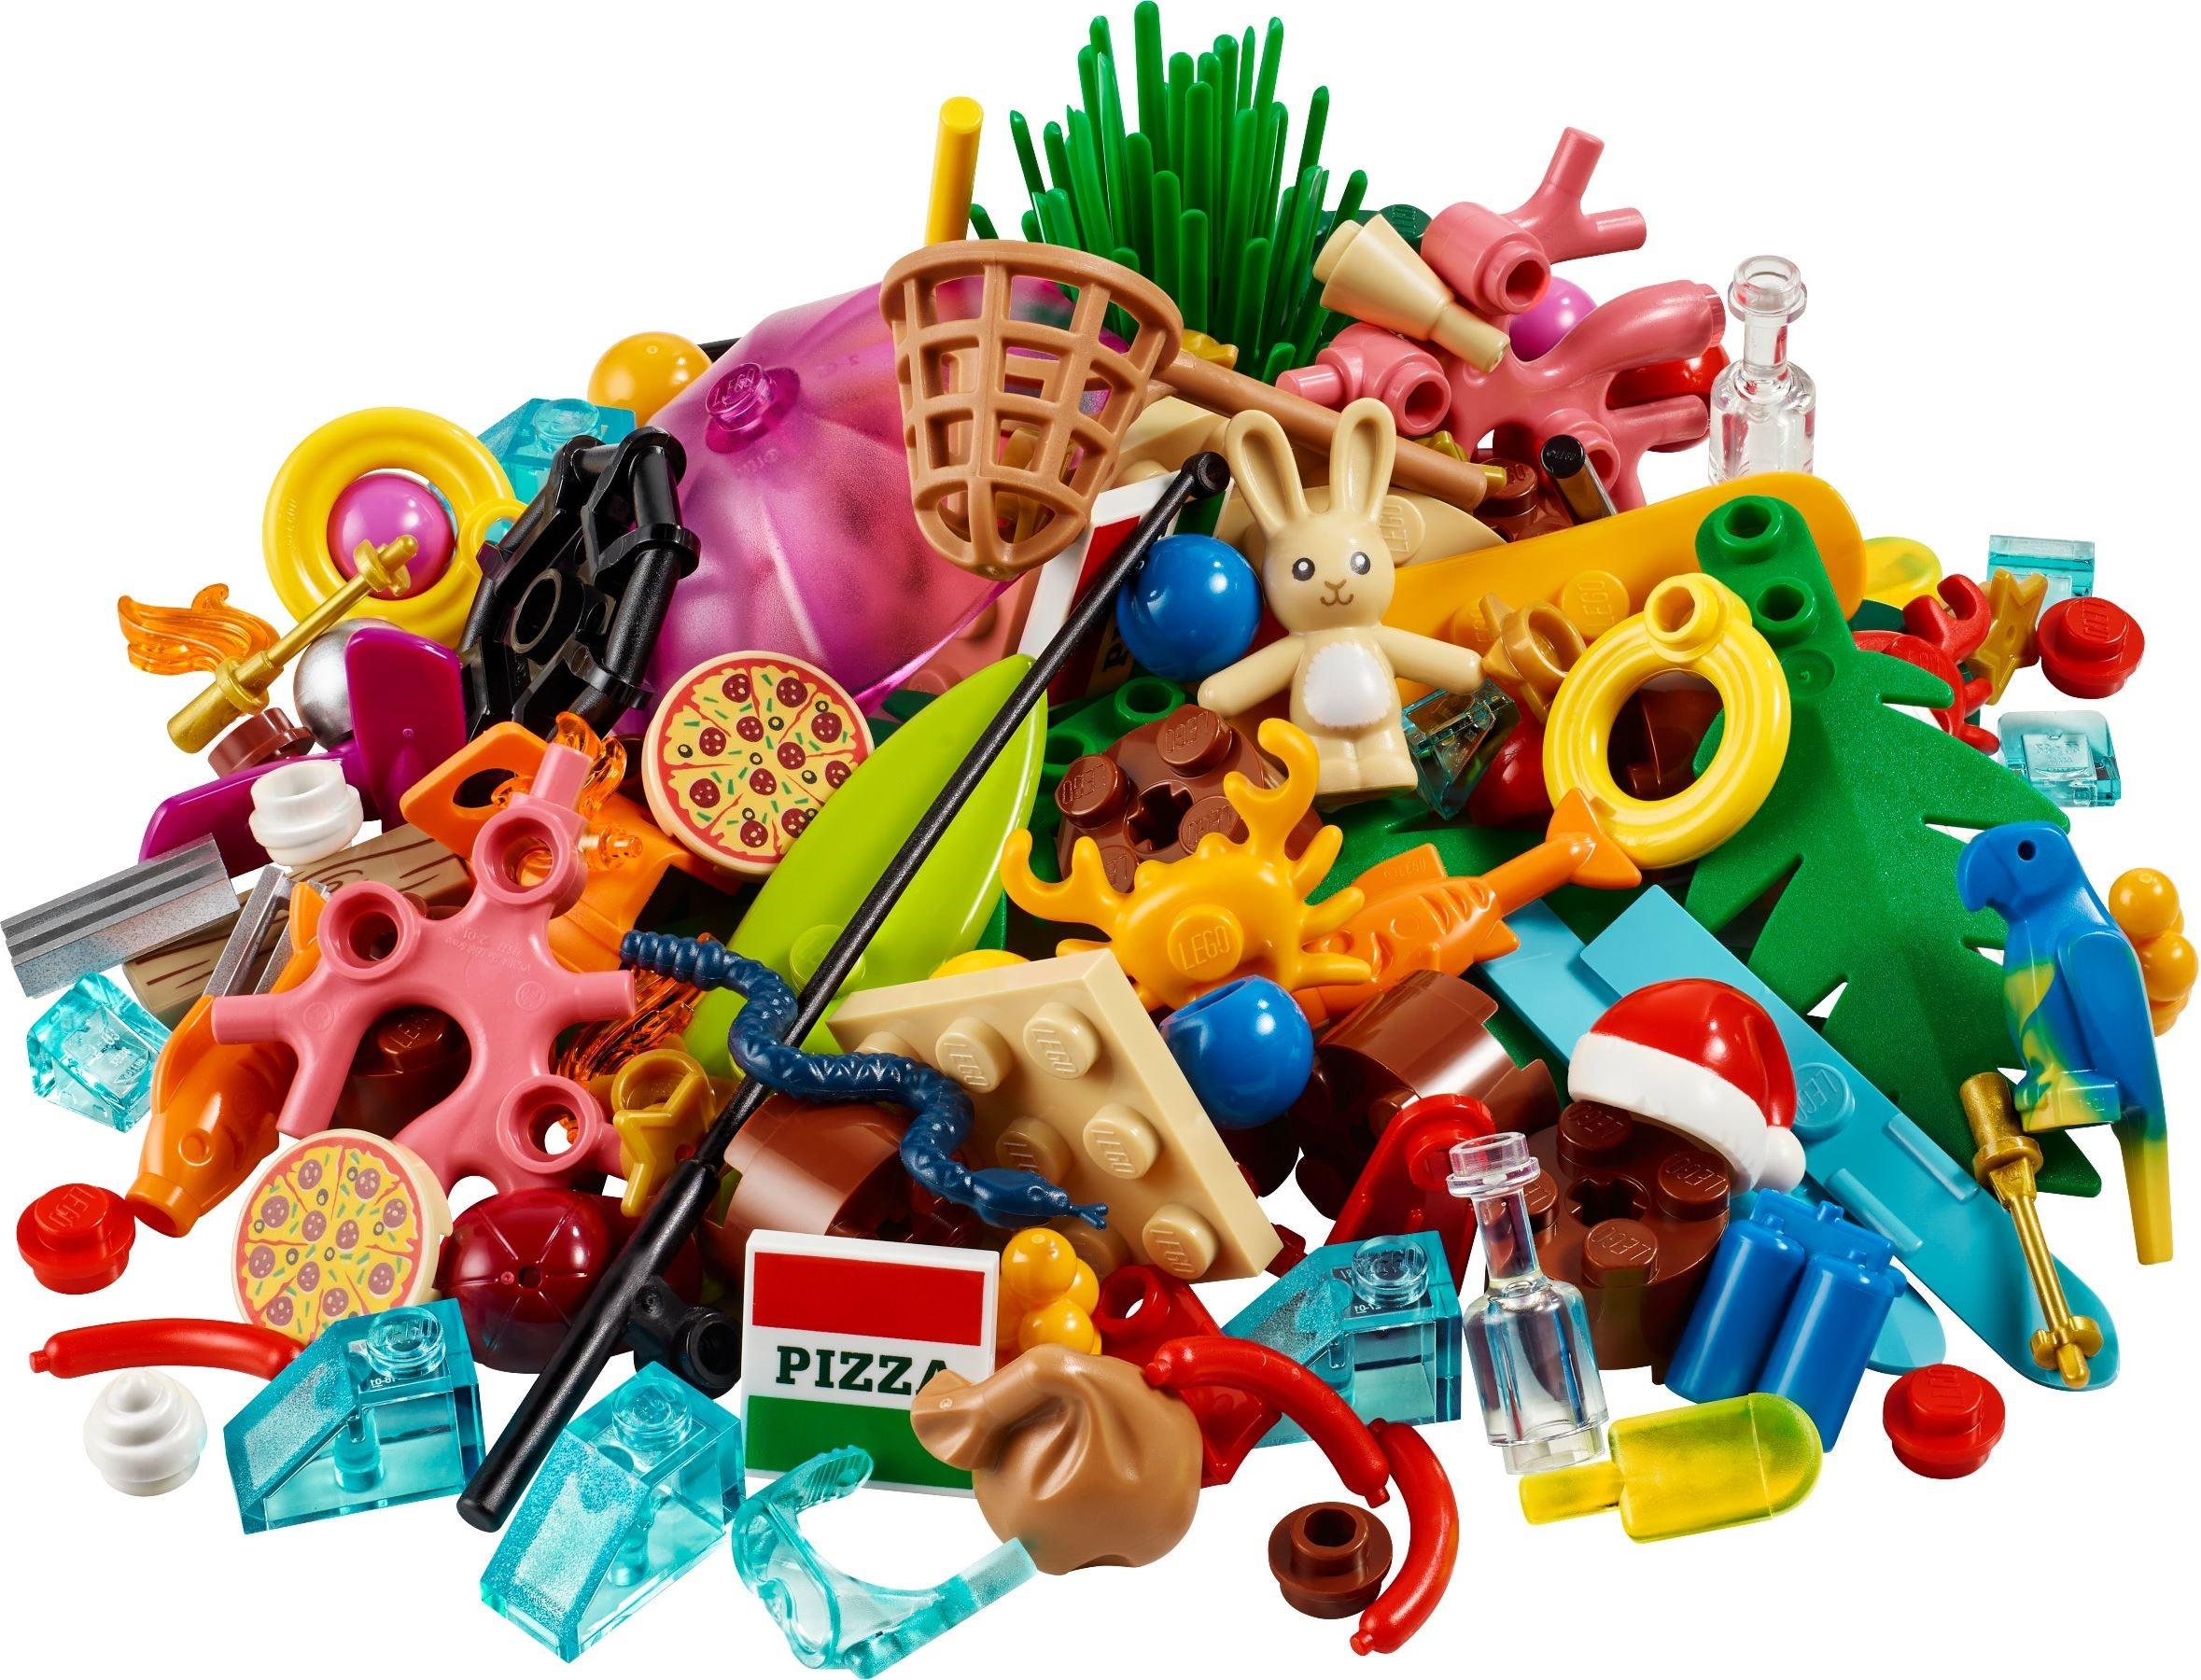 Buy the LEGO Promo Factory Sealed 40593 Fun Creativity 12 in 1 w